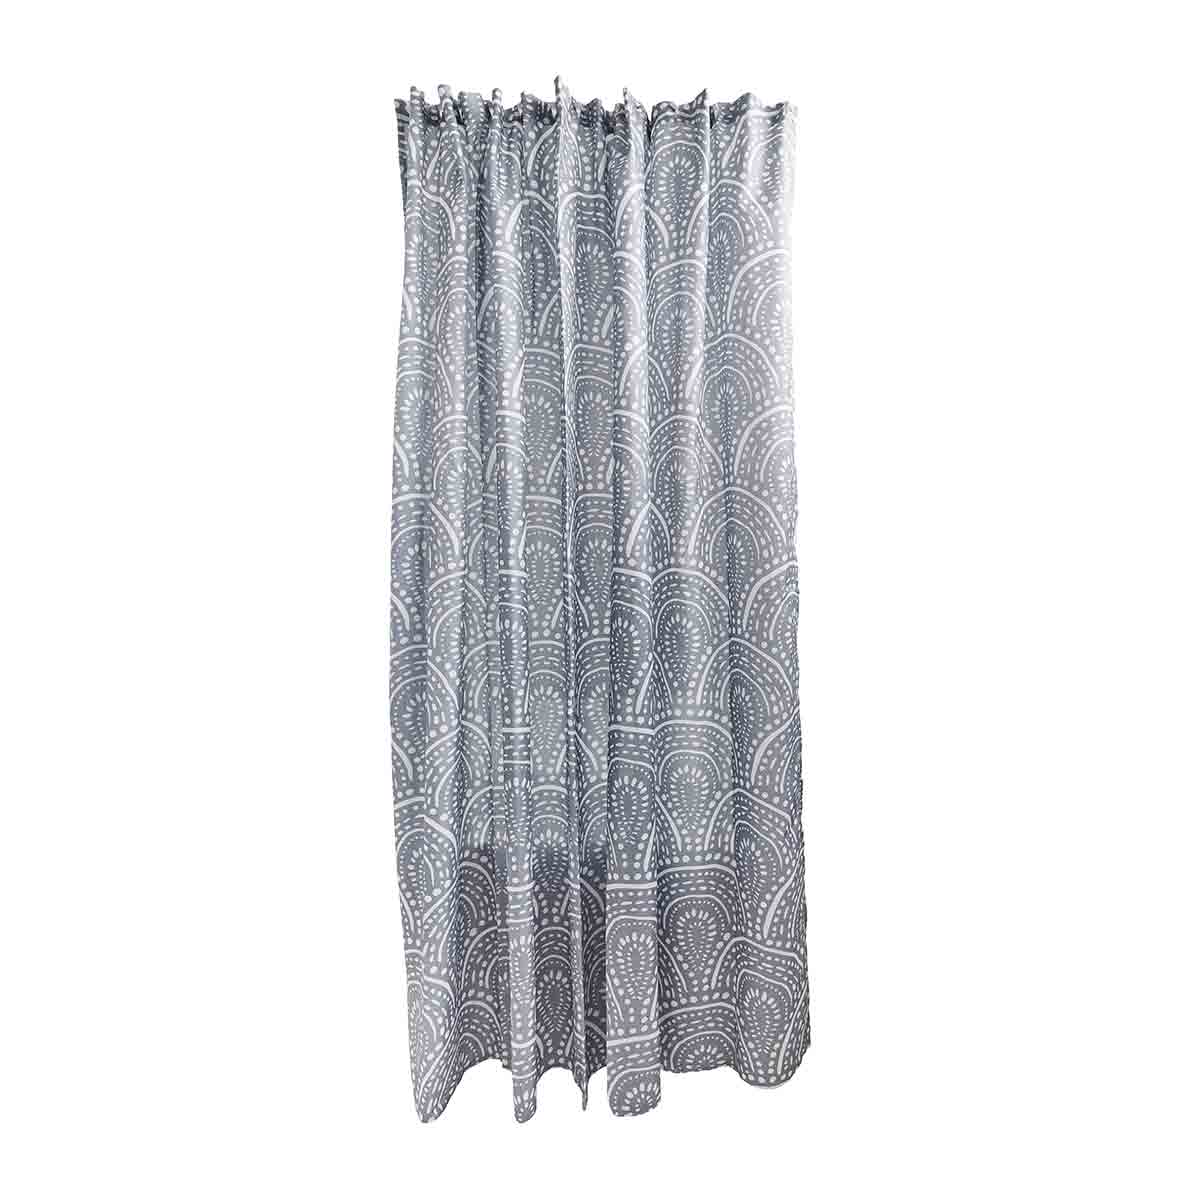 Joy Shower Curtain